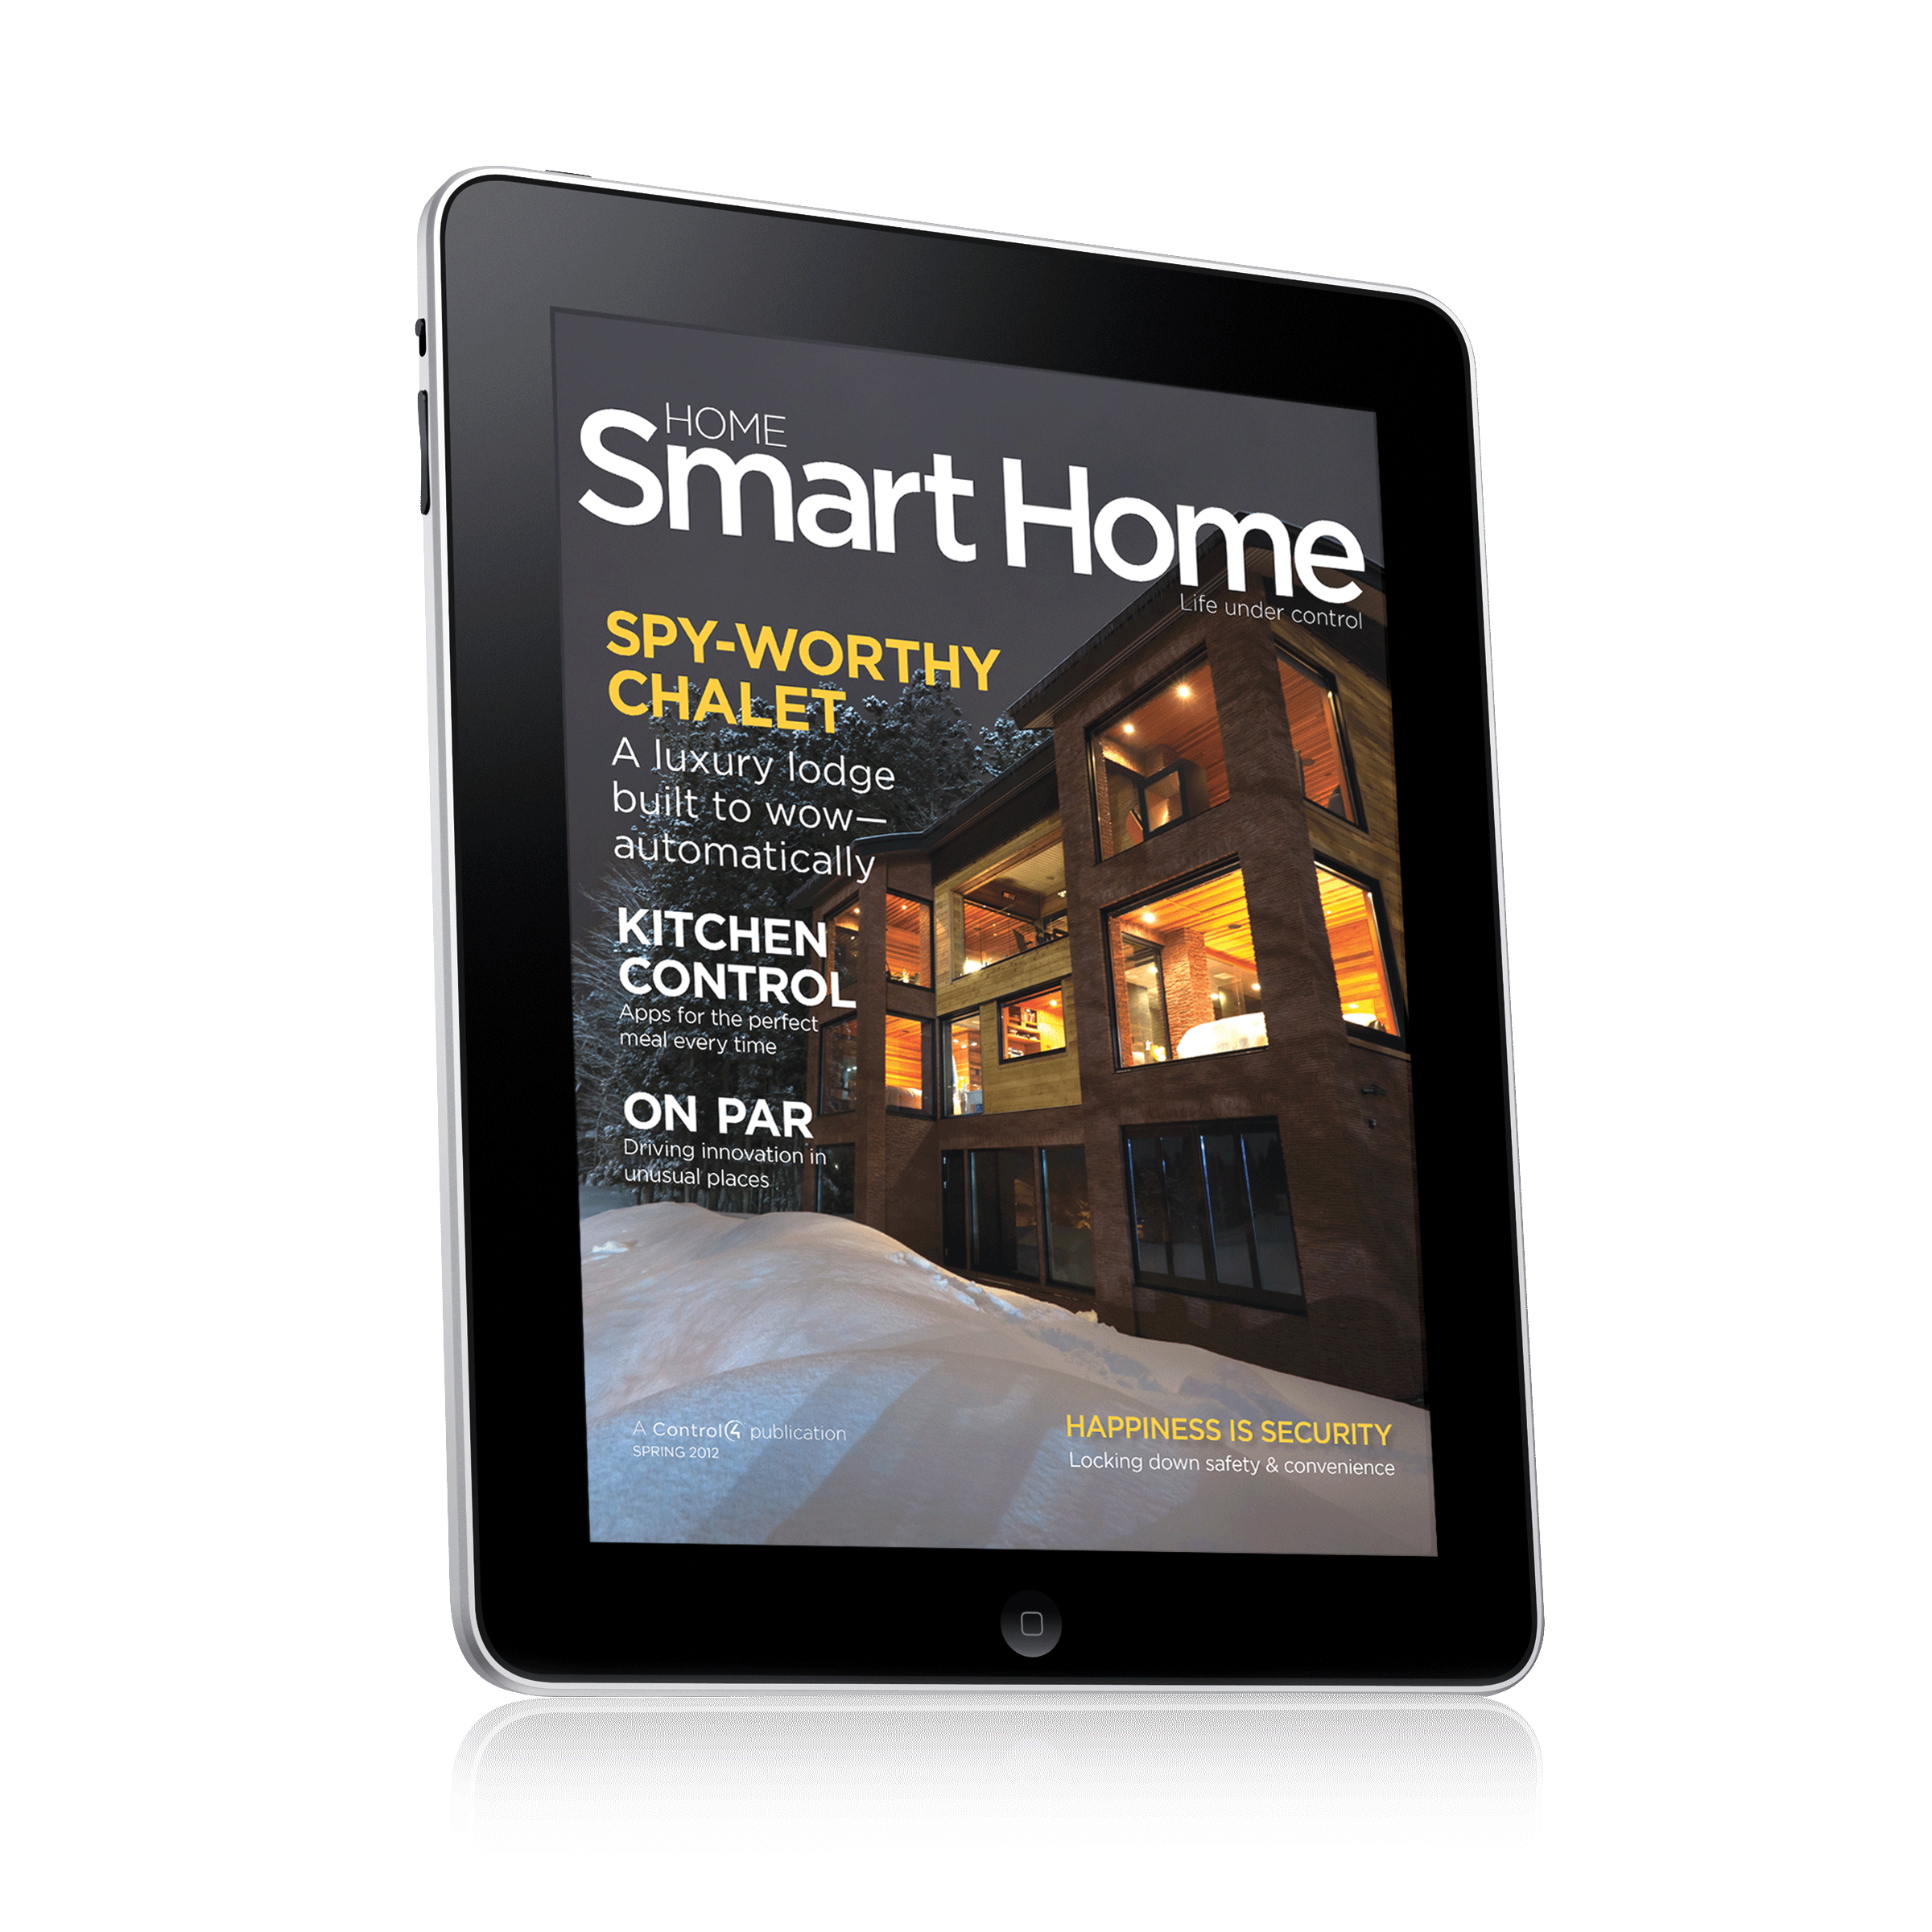 Home Smart Home iPad App